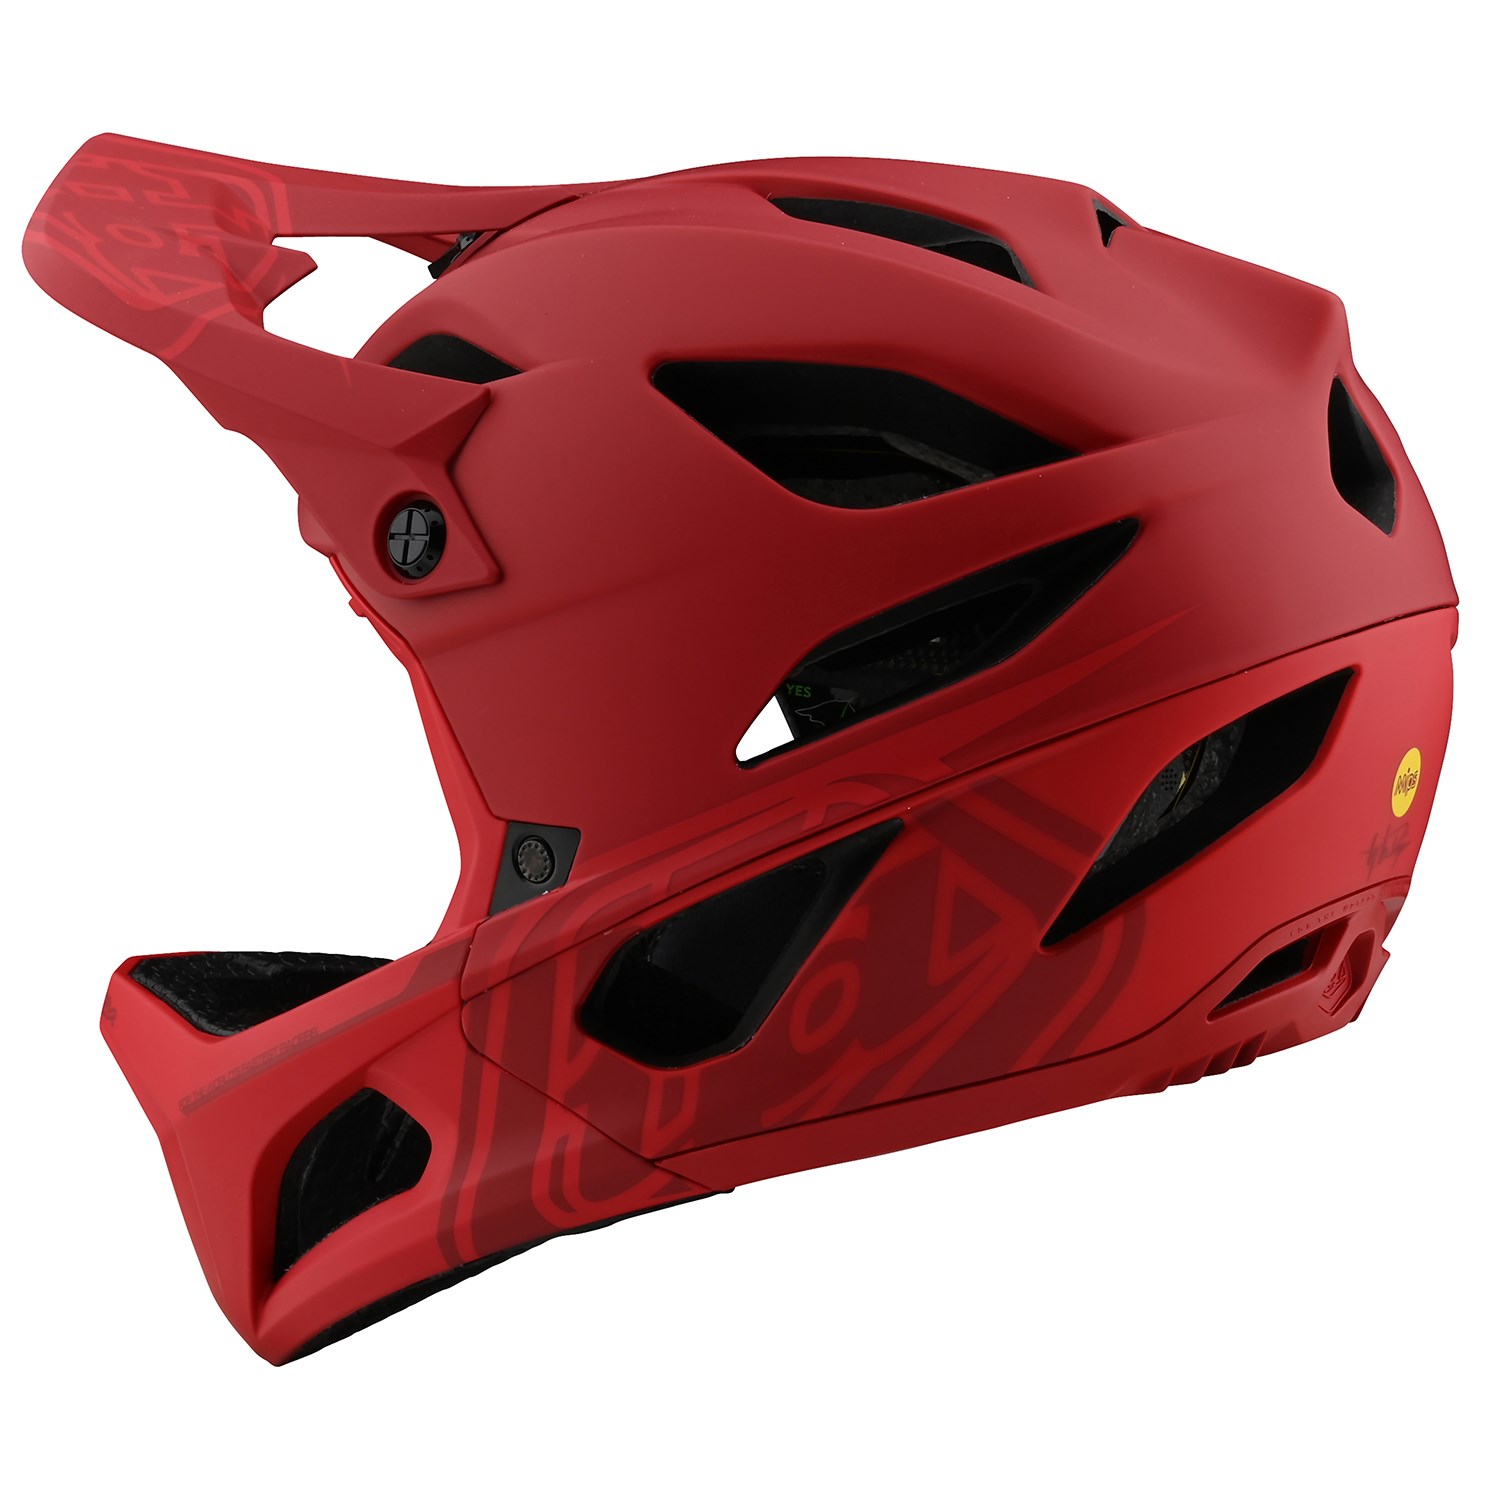 troy lee full face mountain bike helmet